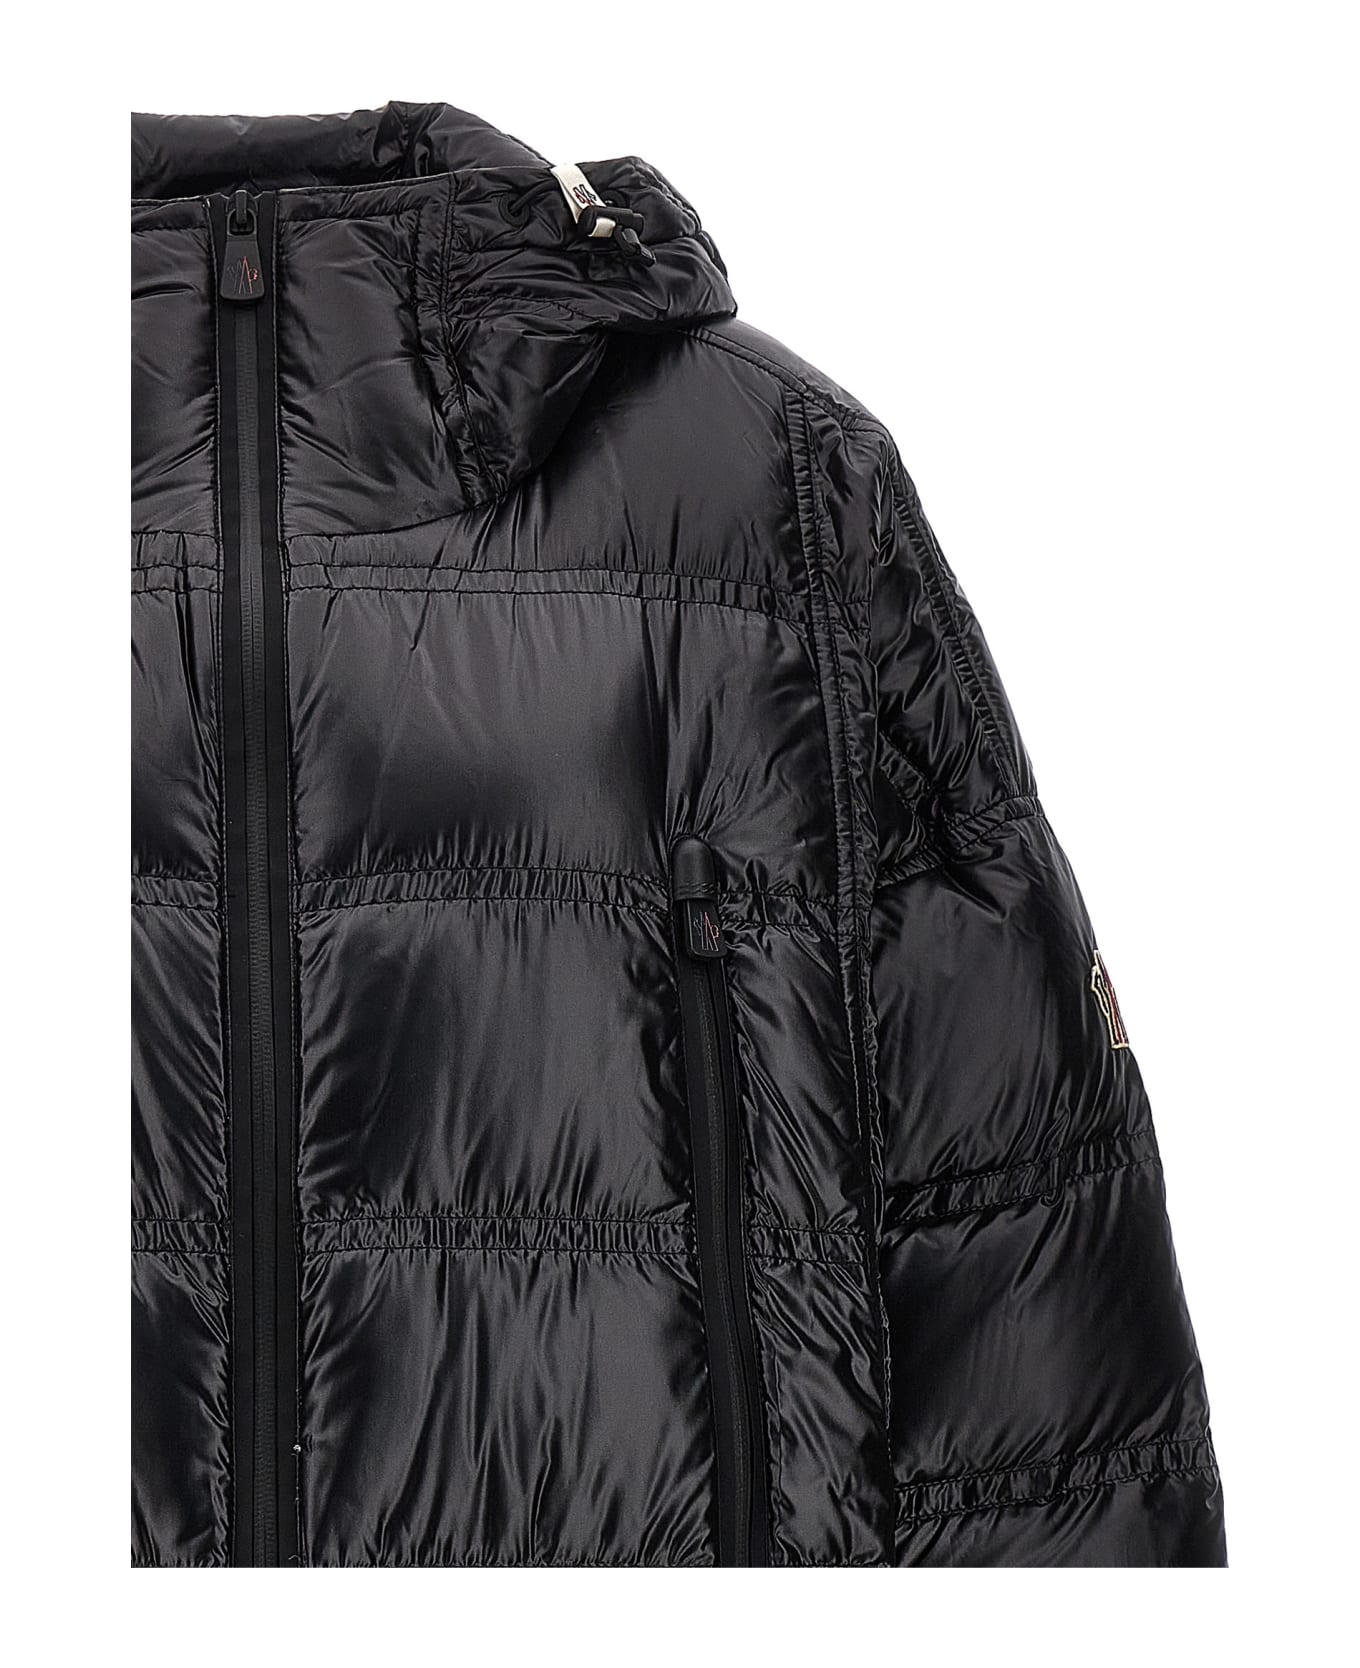 Moncler Grenoble Long Down Jacket 'rochelair' - Black コート